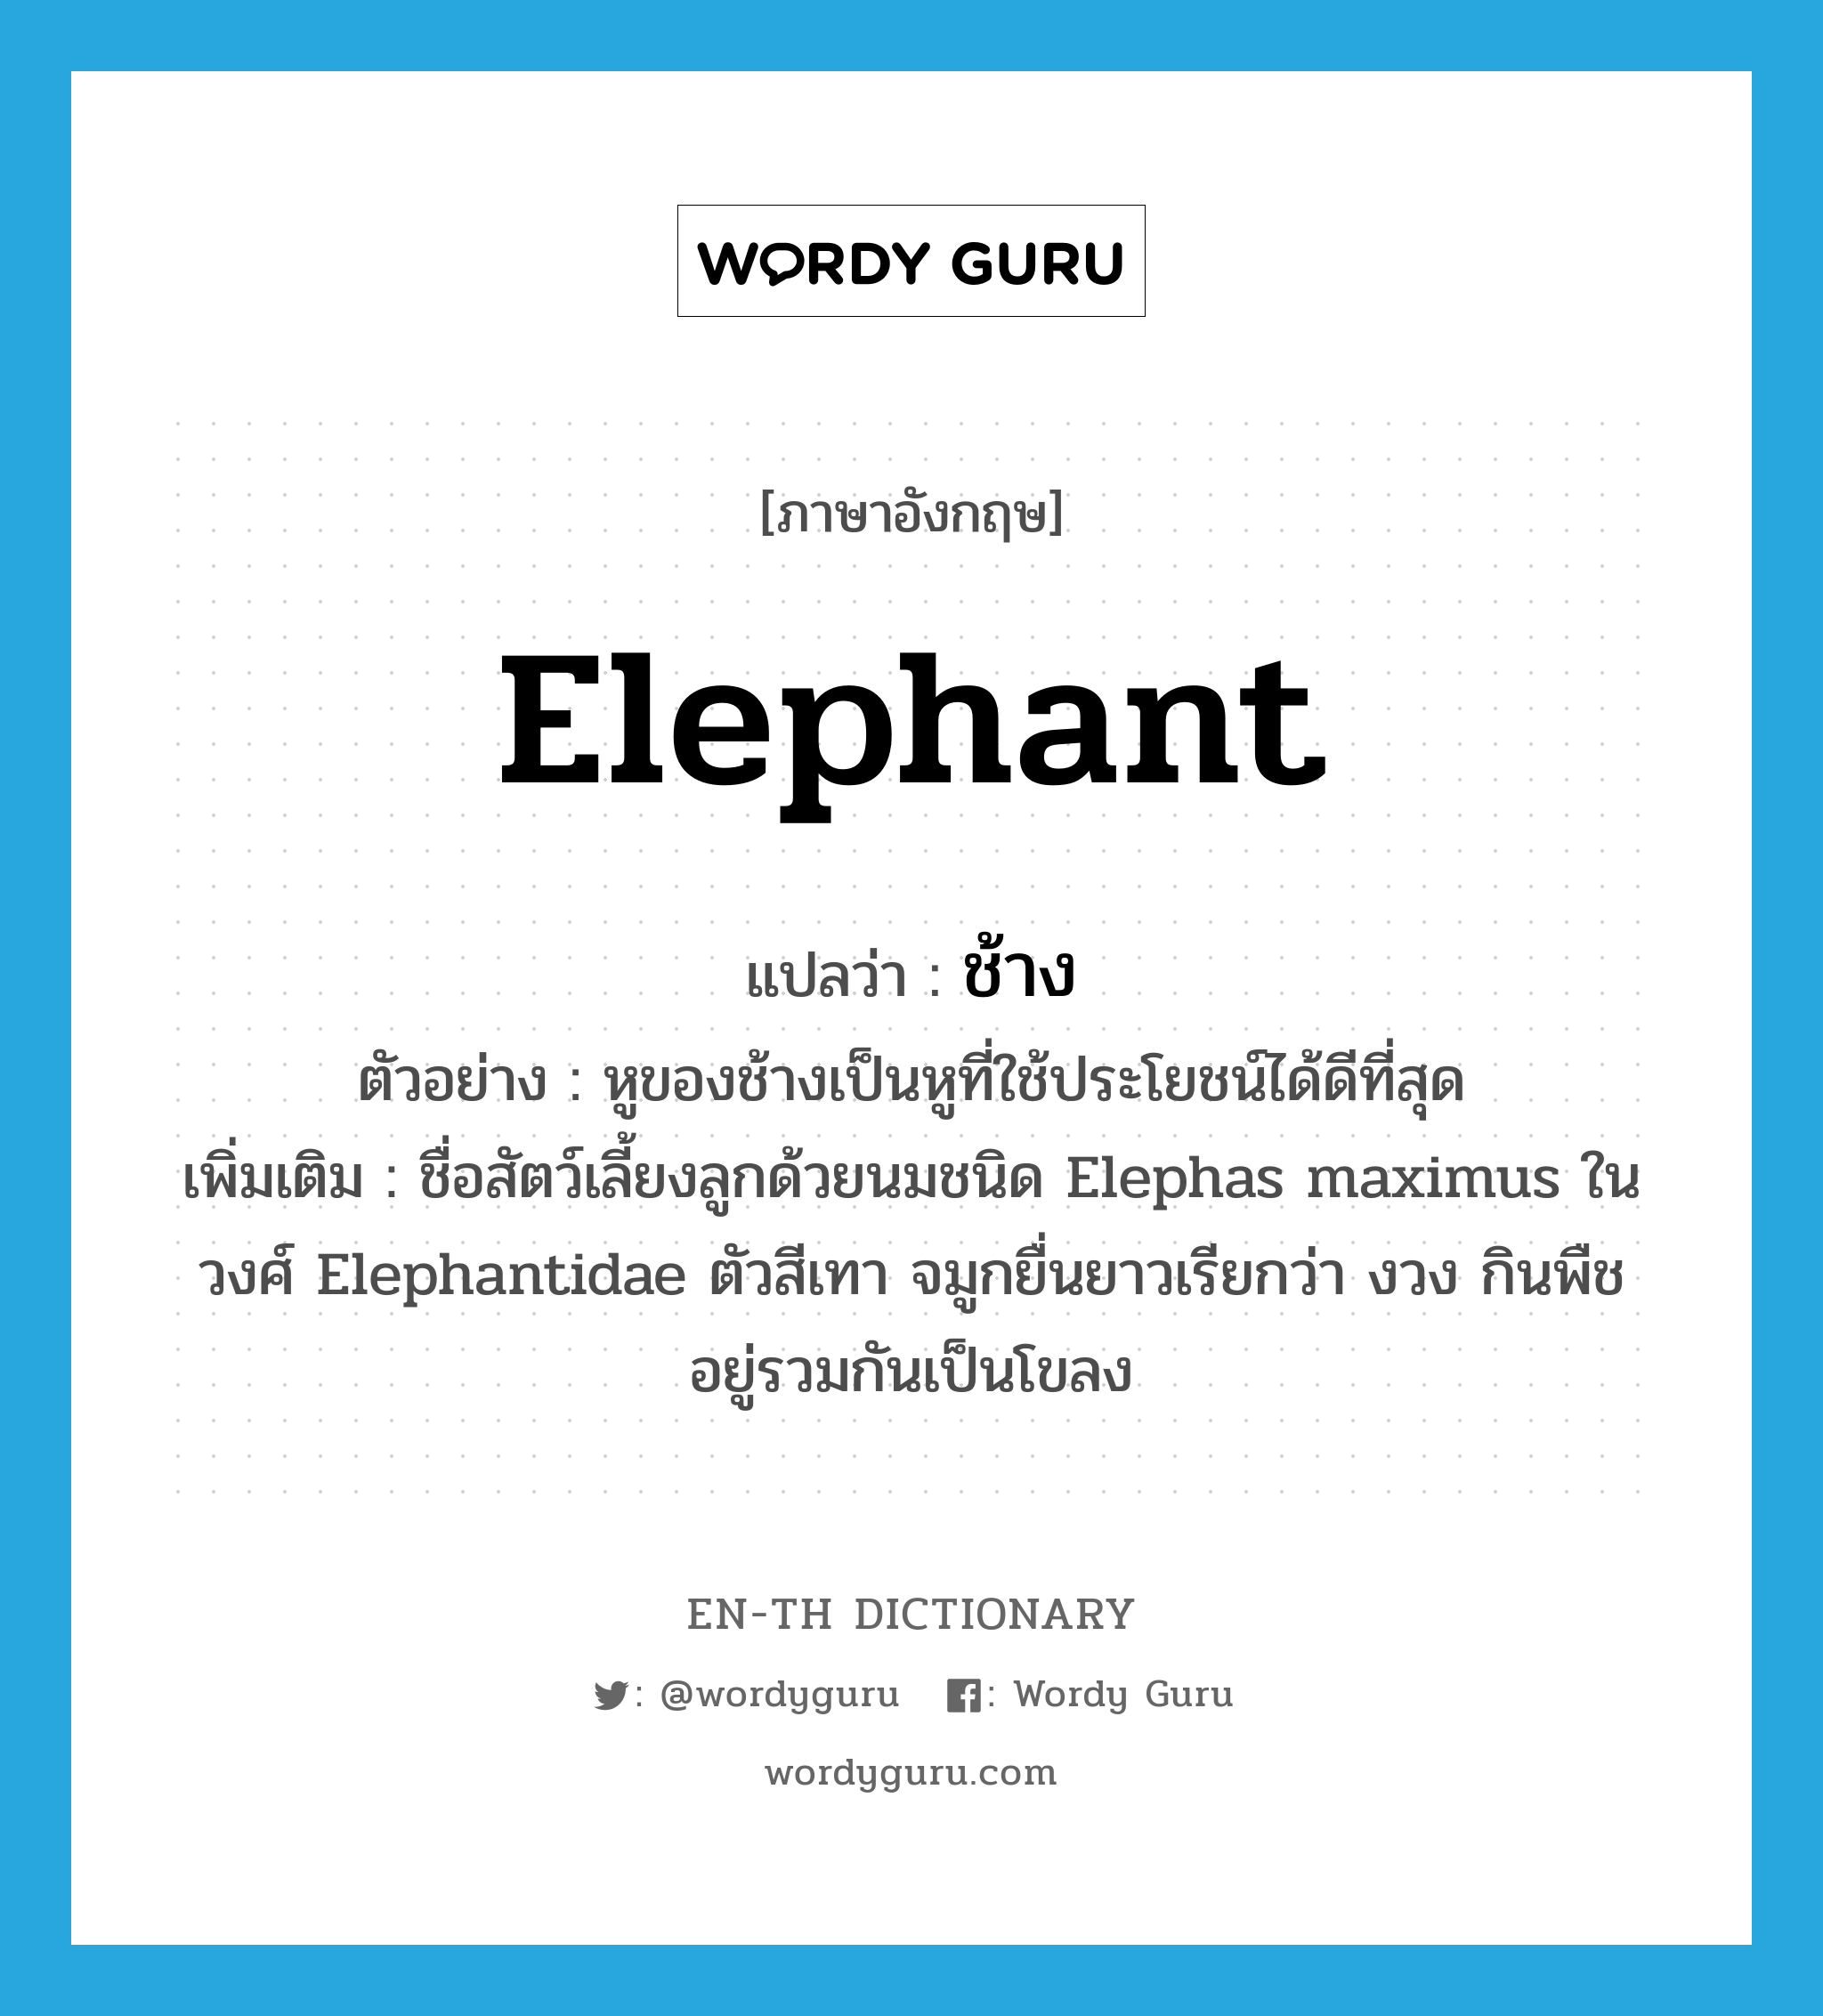 elephant แปลว่า?, คำศัพท์ภาษาอังกฤษ elephant แปลว่า ช้าง ประเภท N ตัวอย่าง หูของช้างเป็นหูที่ใช้ประโยชน์ได้ดีที่สุด เพิ่มเติม ชื่อสัตว์เลี้ยงลูกด้วยนมชนิด Elephas maximus ในวงศ์ Elephantidae ตัวสีเทา จมูกยื่นยาวเรียกว่า งวง กินพืช อยู่รวมกันเป็นโขลง หมวด N